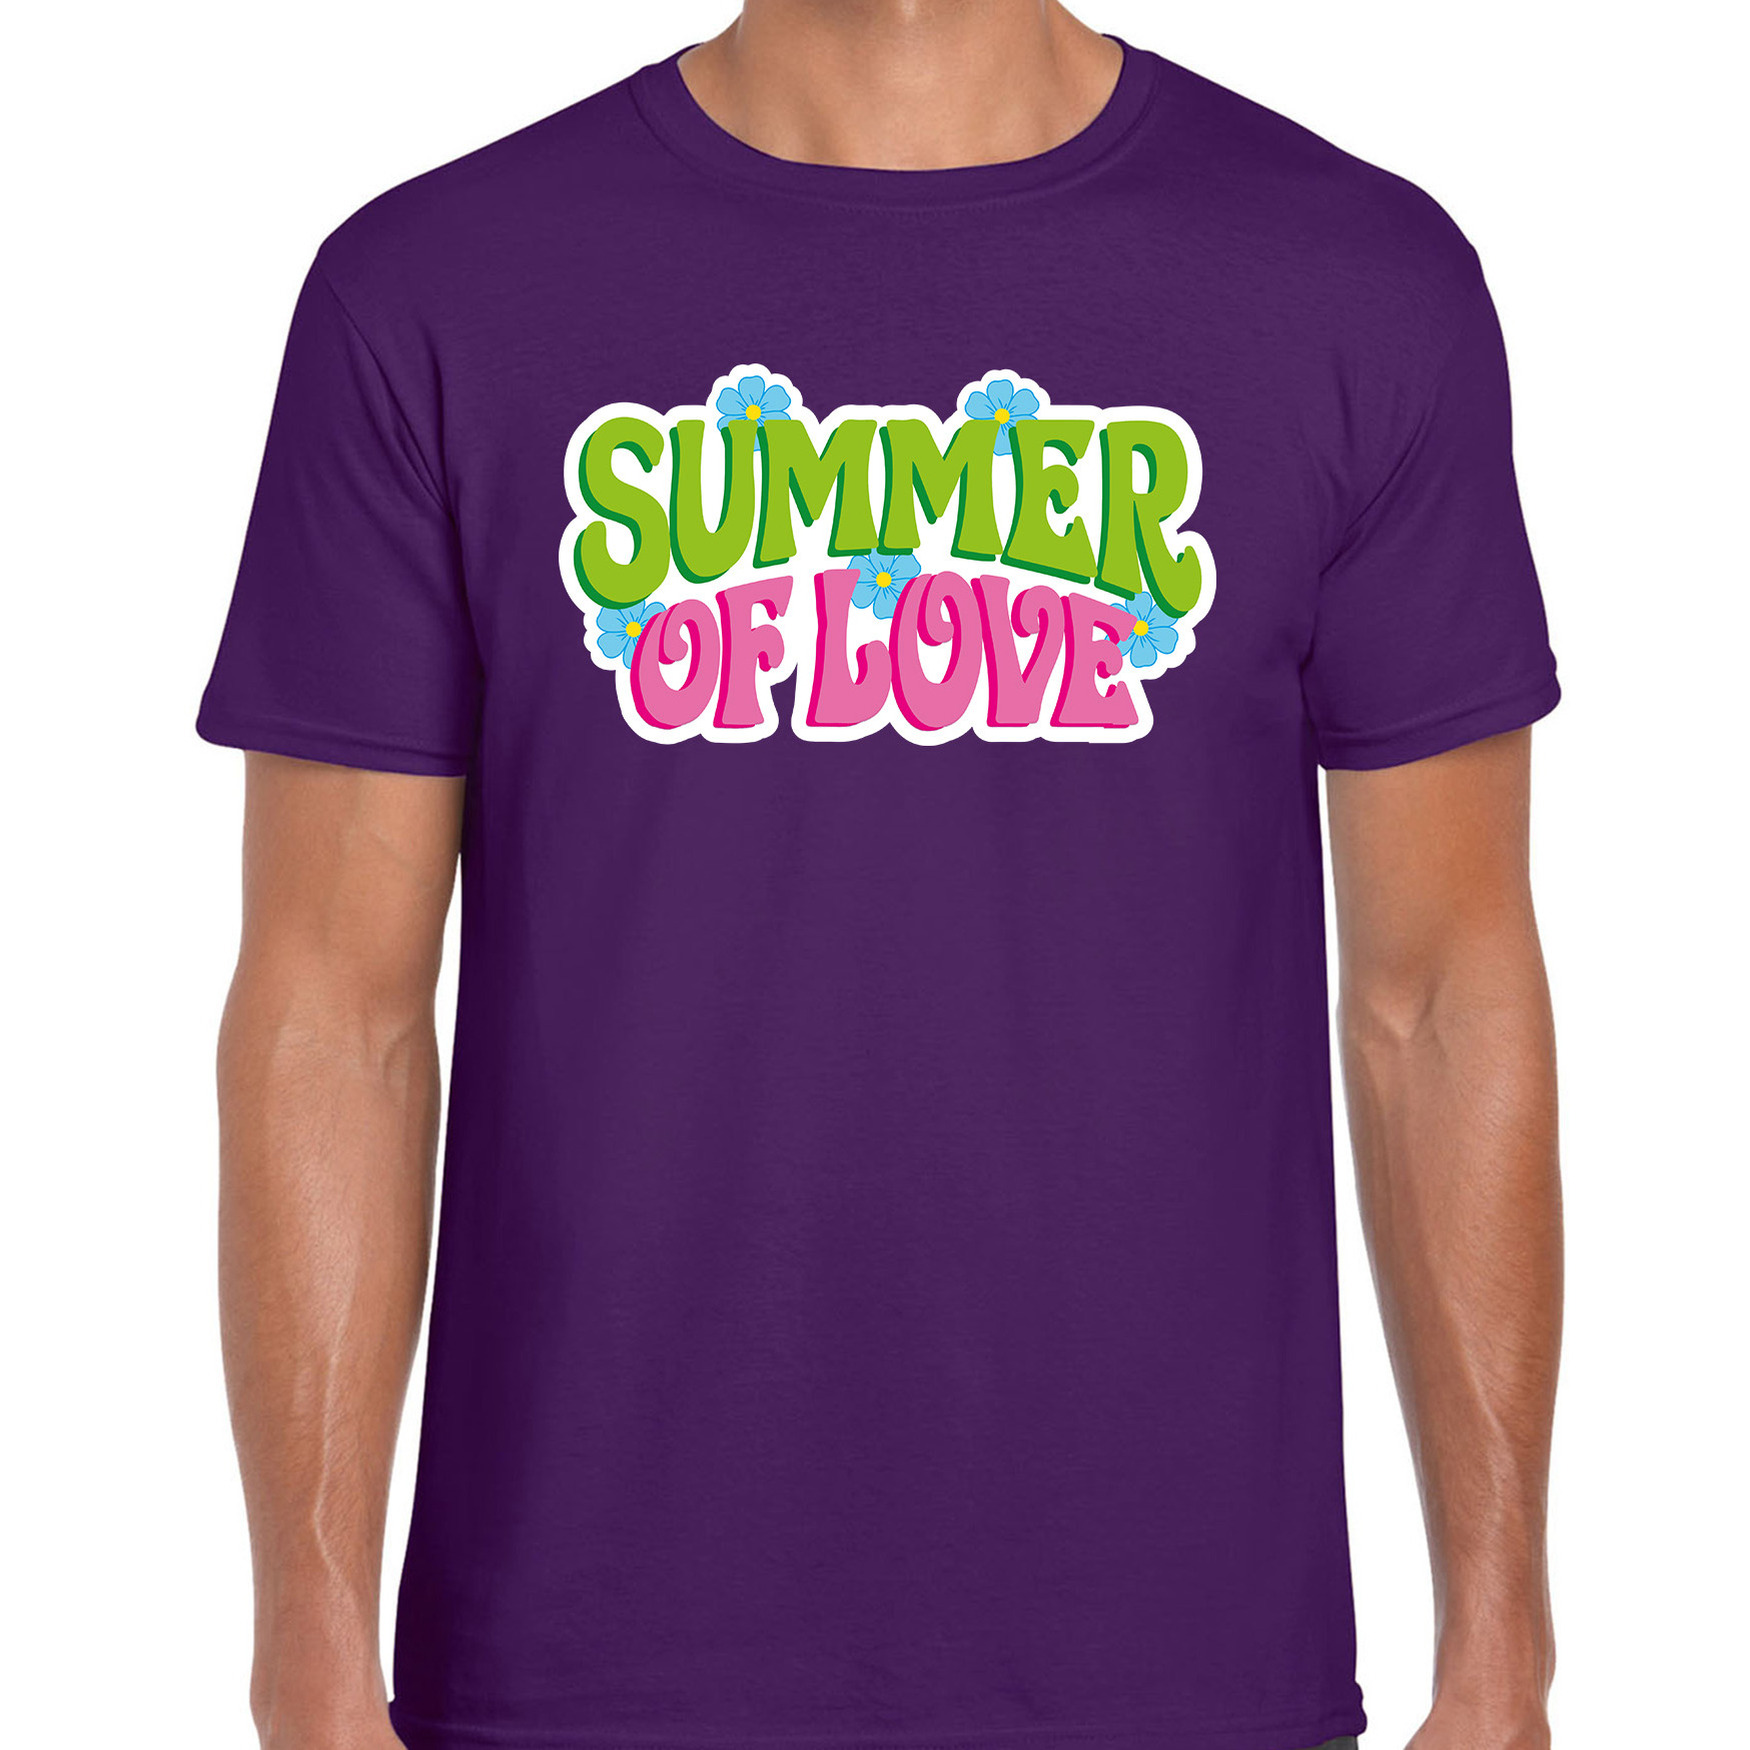 Jaren 60 Flower Power Summer Of Love verkleed shirt paars heren